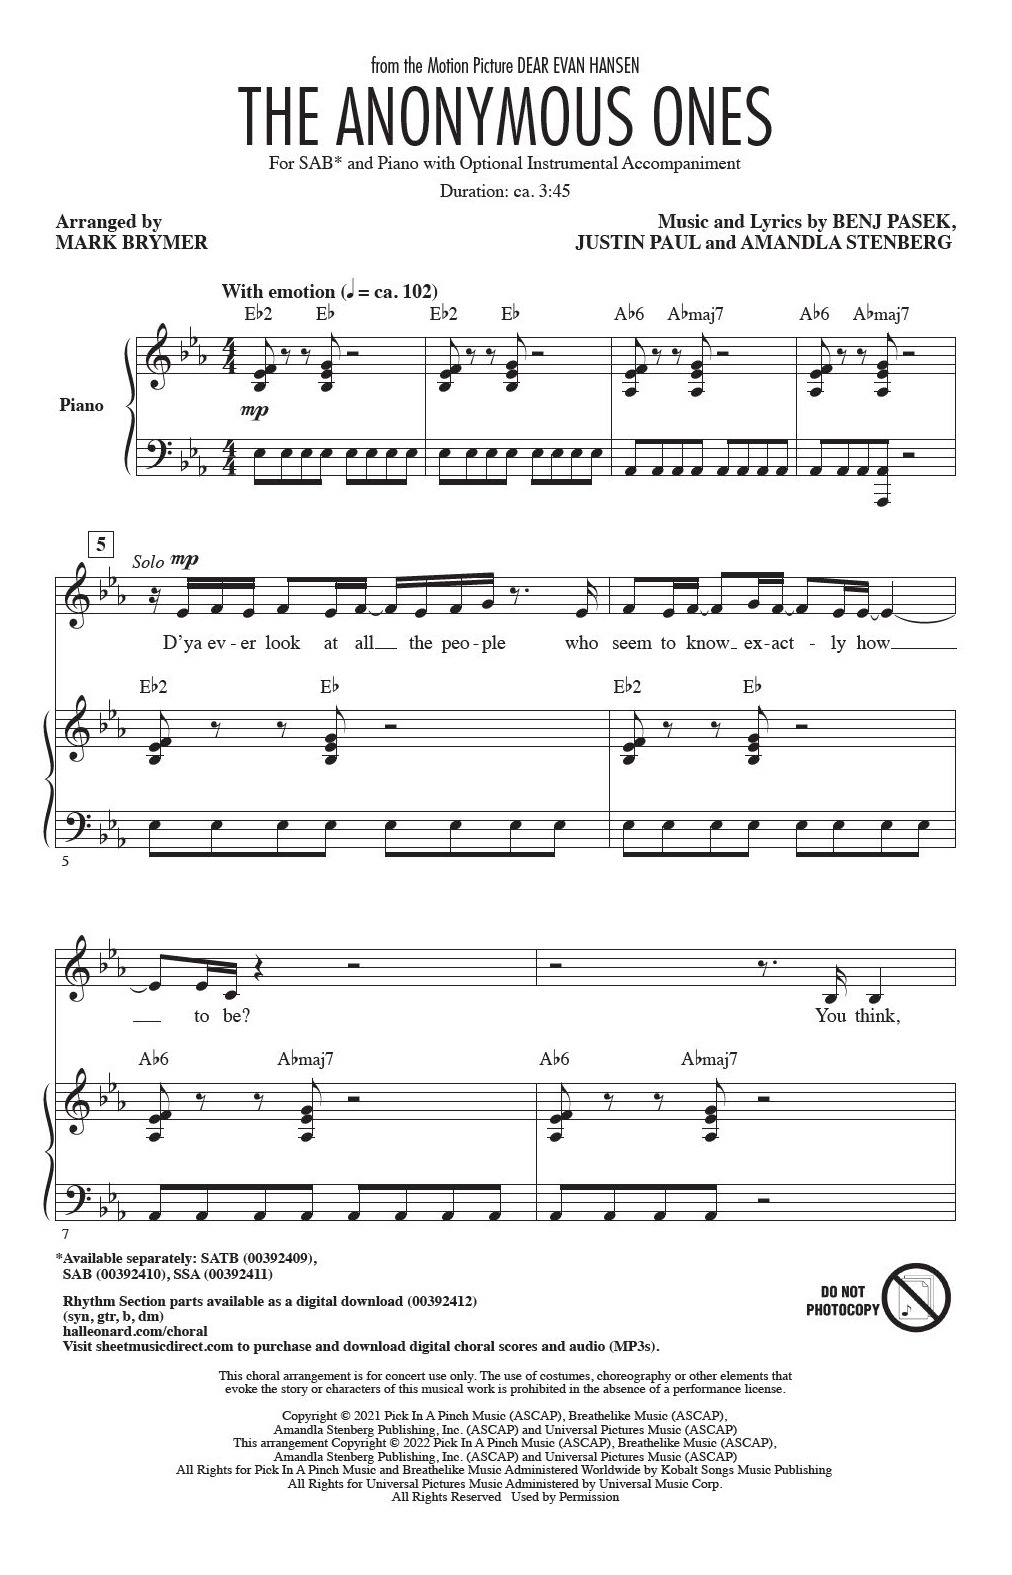 Benj Pasek, Justin Paul & Amandla Stenberg The Anonymous Ones (from Dear Evan Hansen) (arr. Mark Brymer) Sheet Music Notes & Chords for SAB Choir - Download or Print PDF